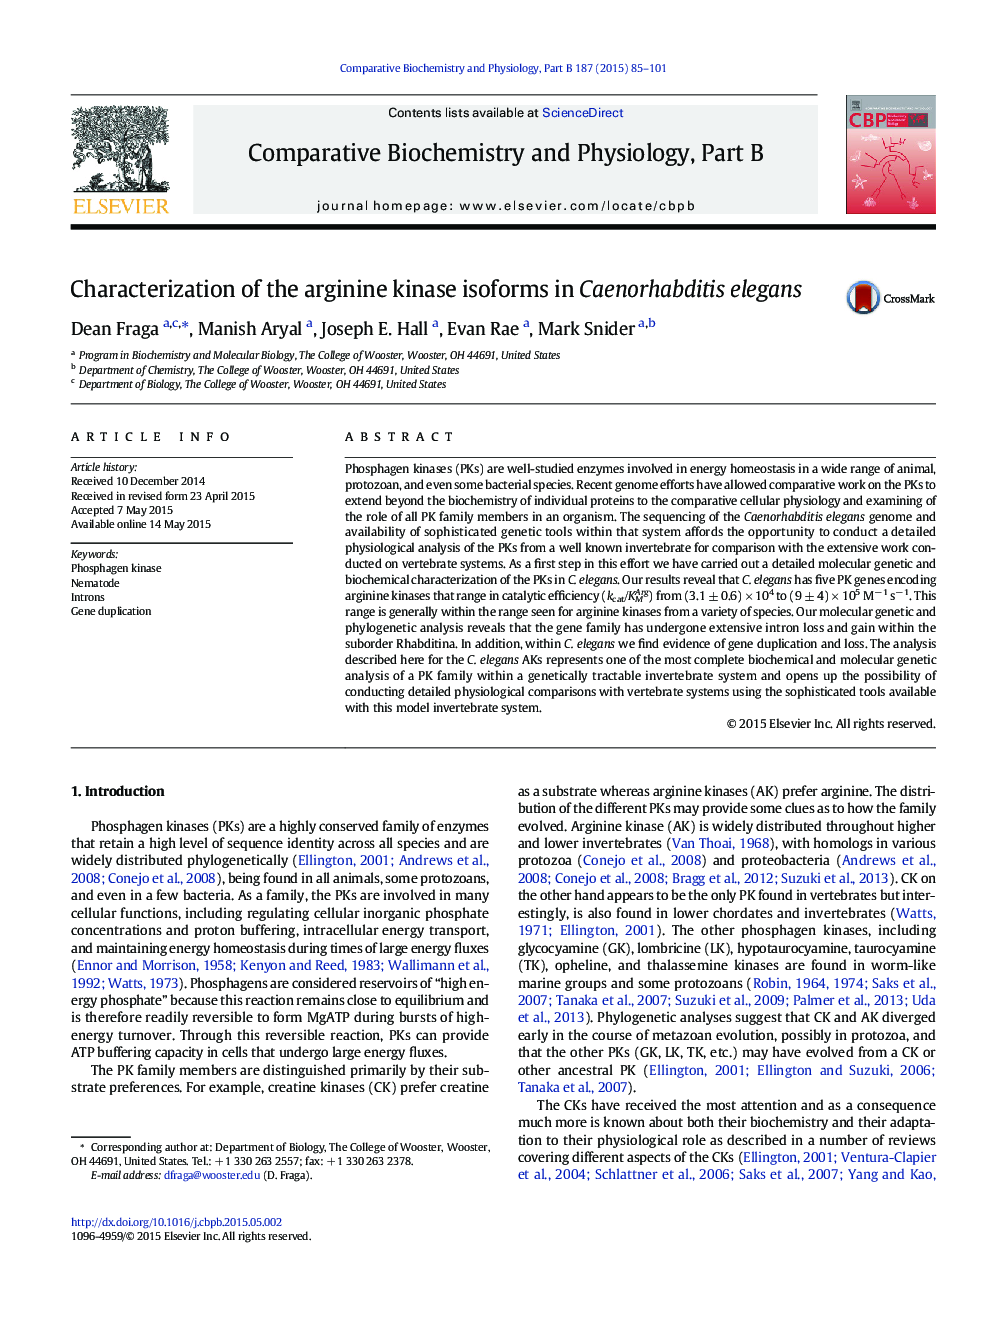 Characterization of the arginine kinase isoforms in Caenorhabditis elegans